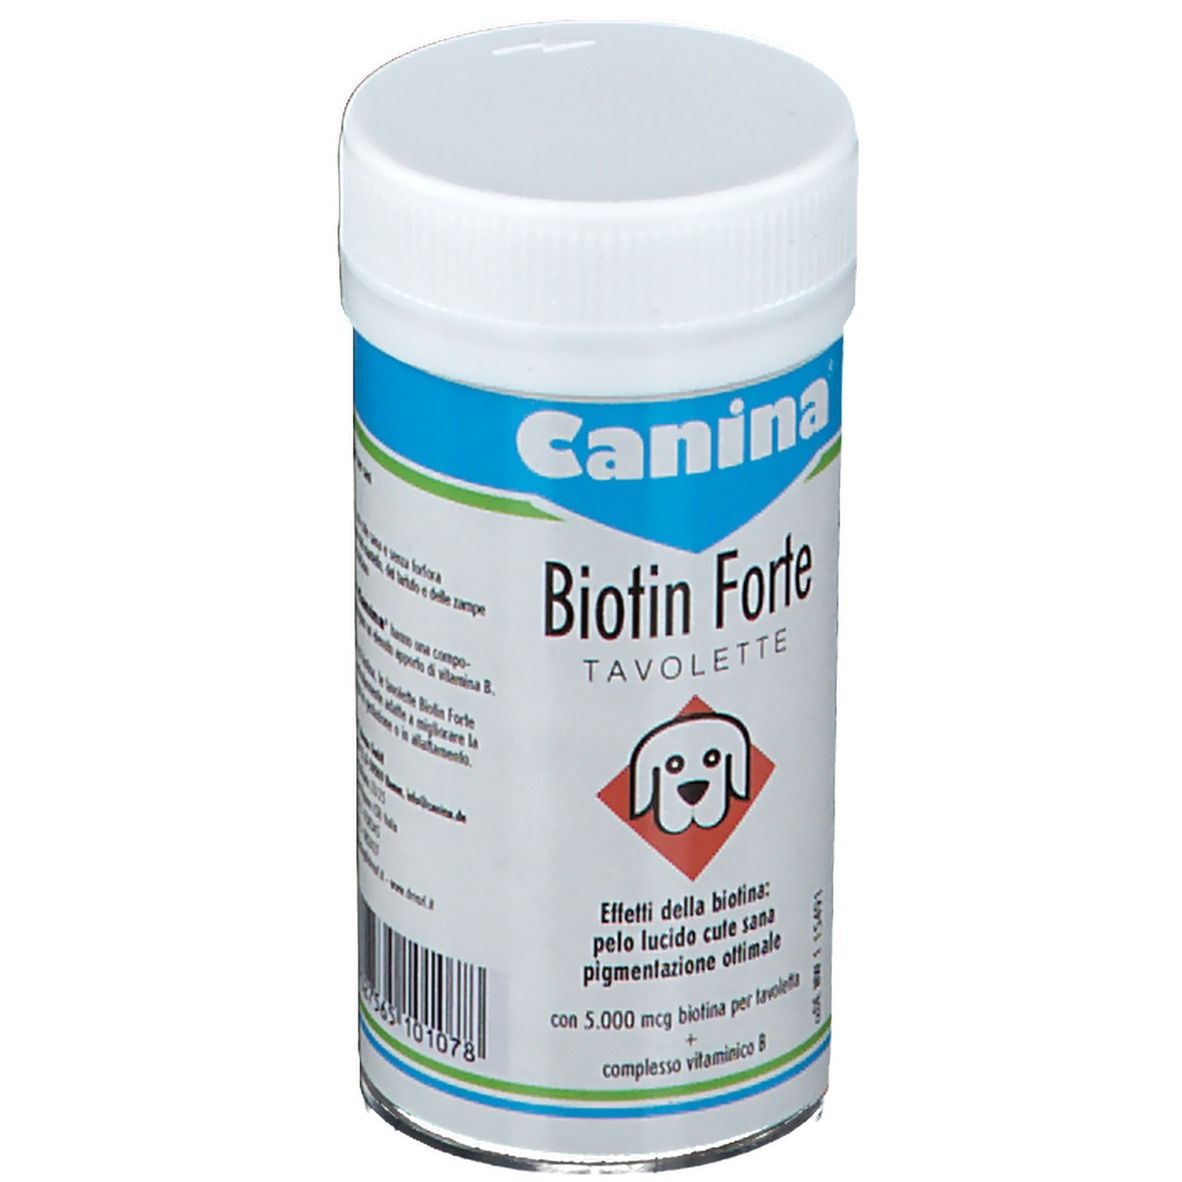 Canina® Biotin Forte Tavolette